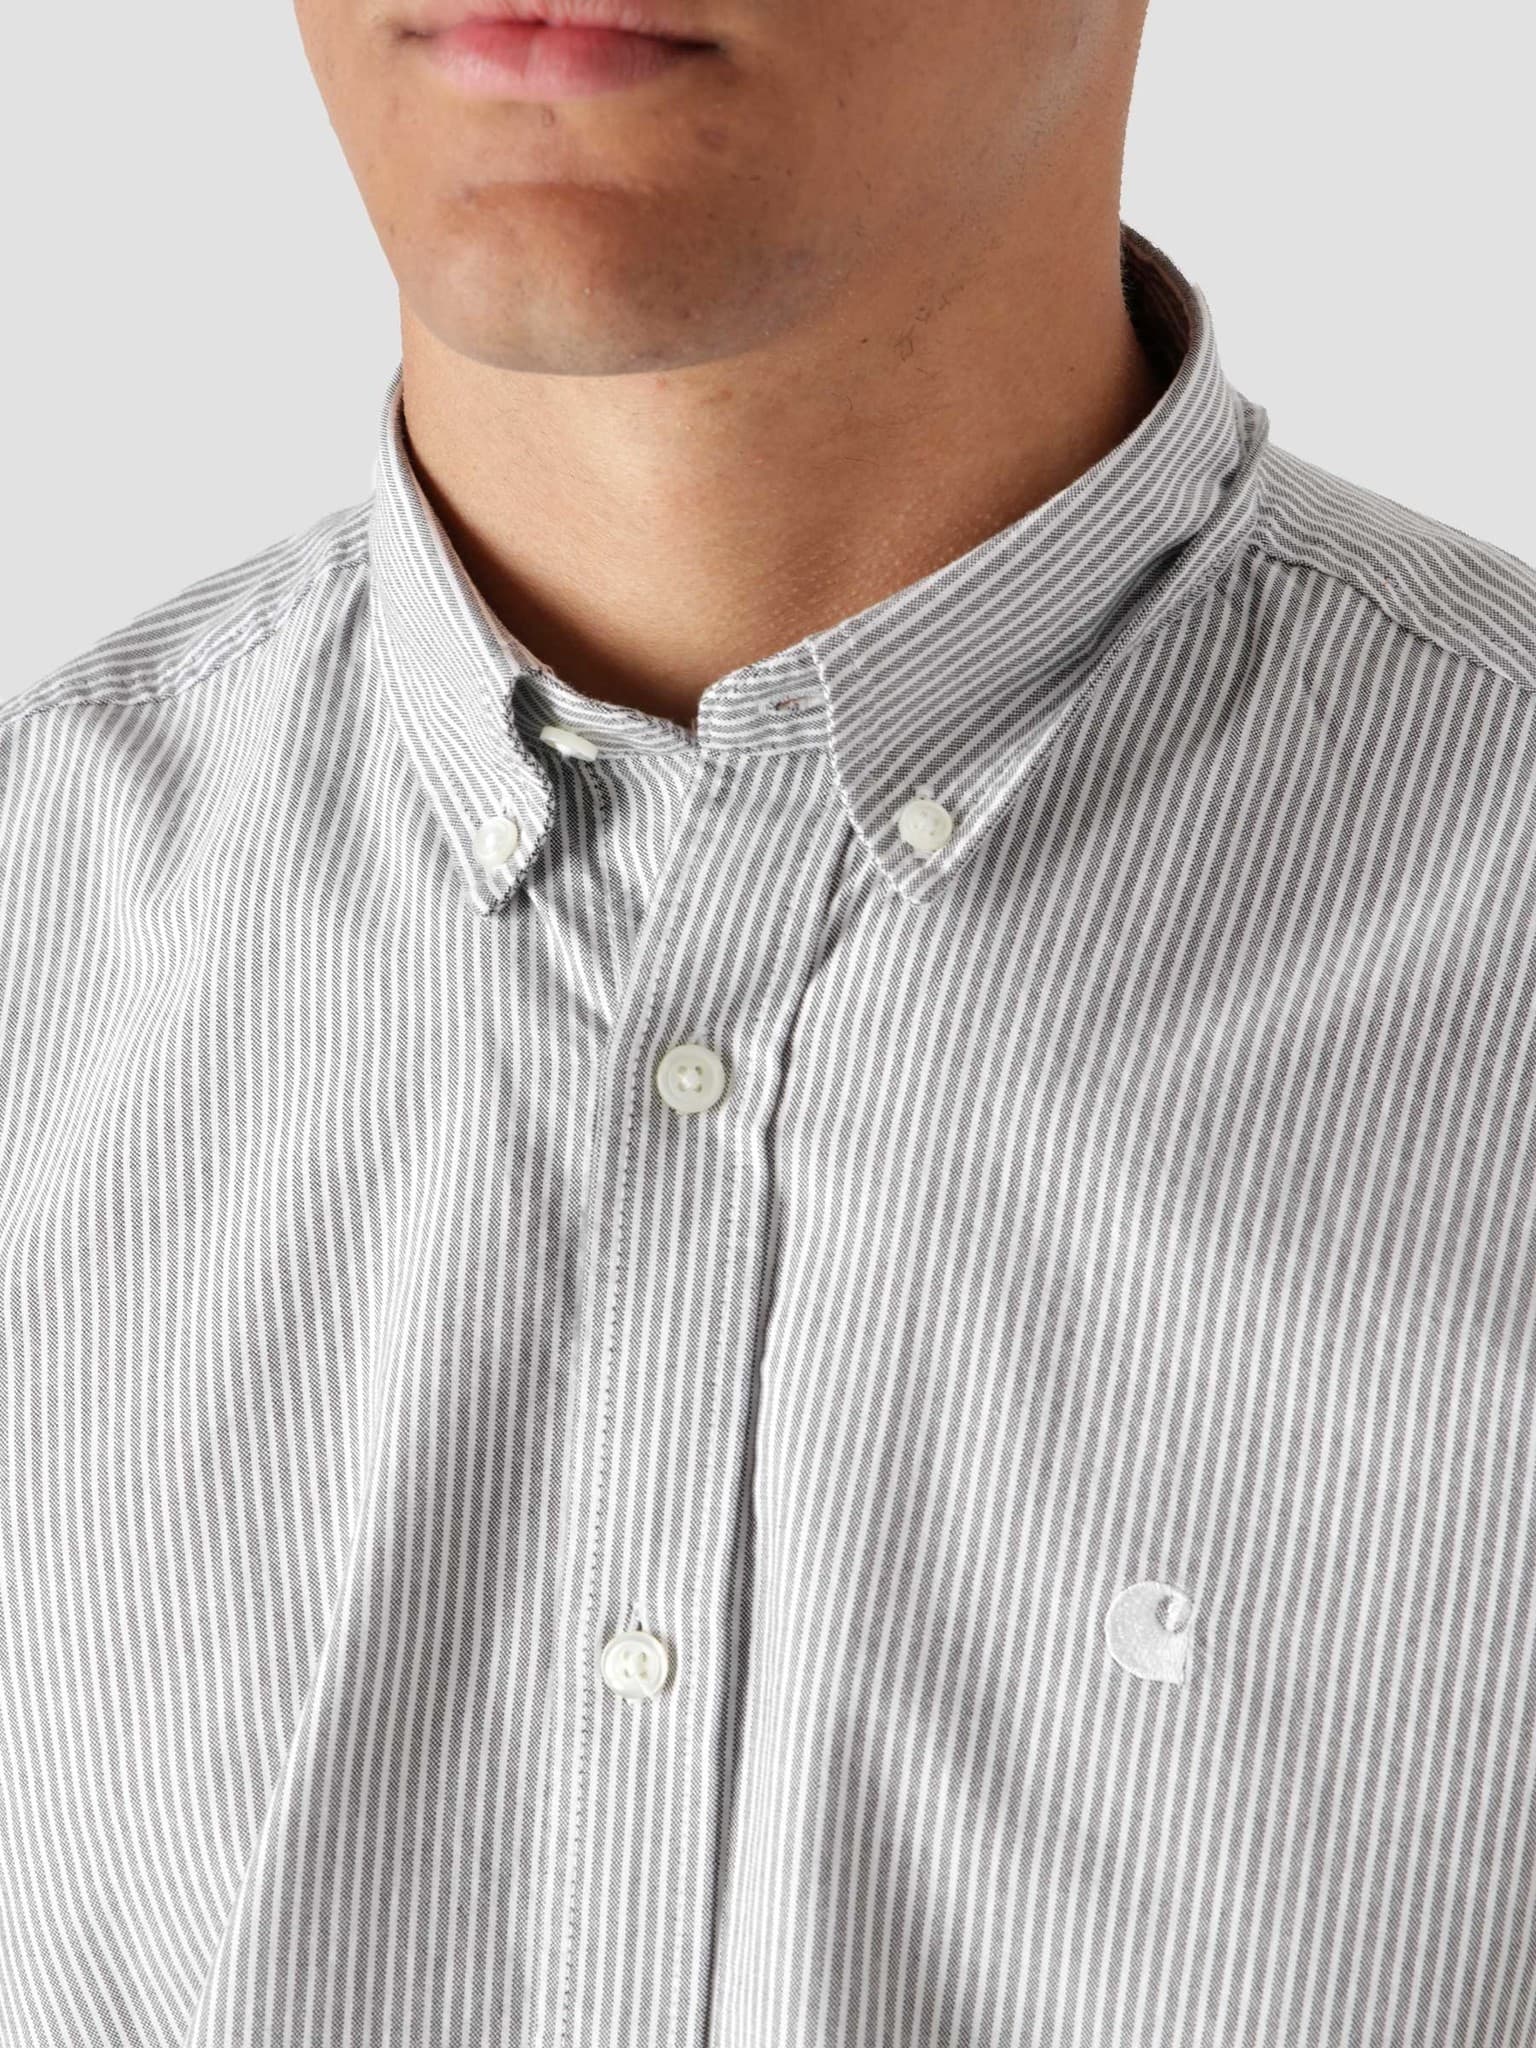 Longsleeve Duffield Shirt Duffield Stripe Black White I025245-8990